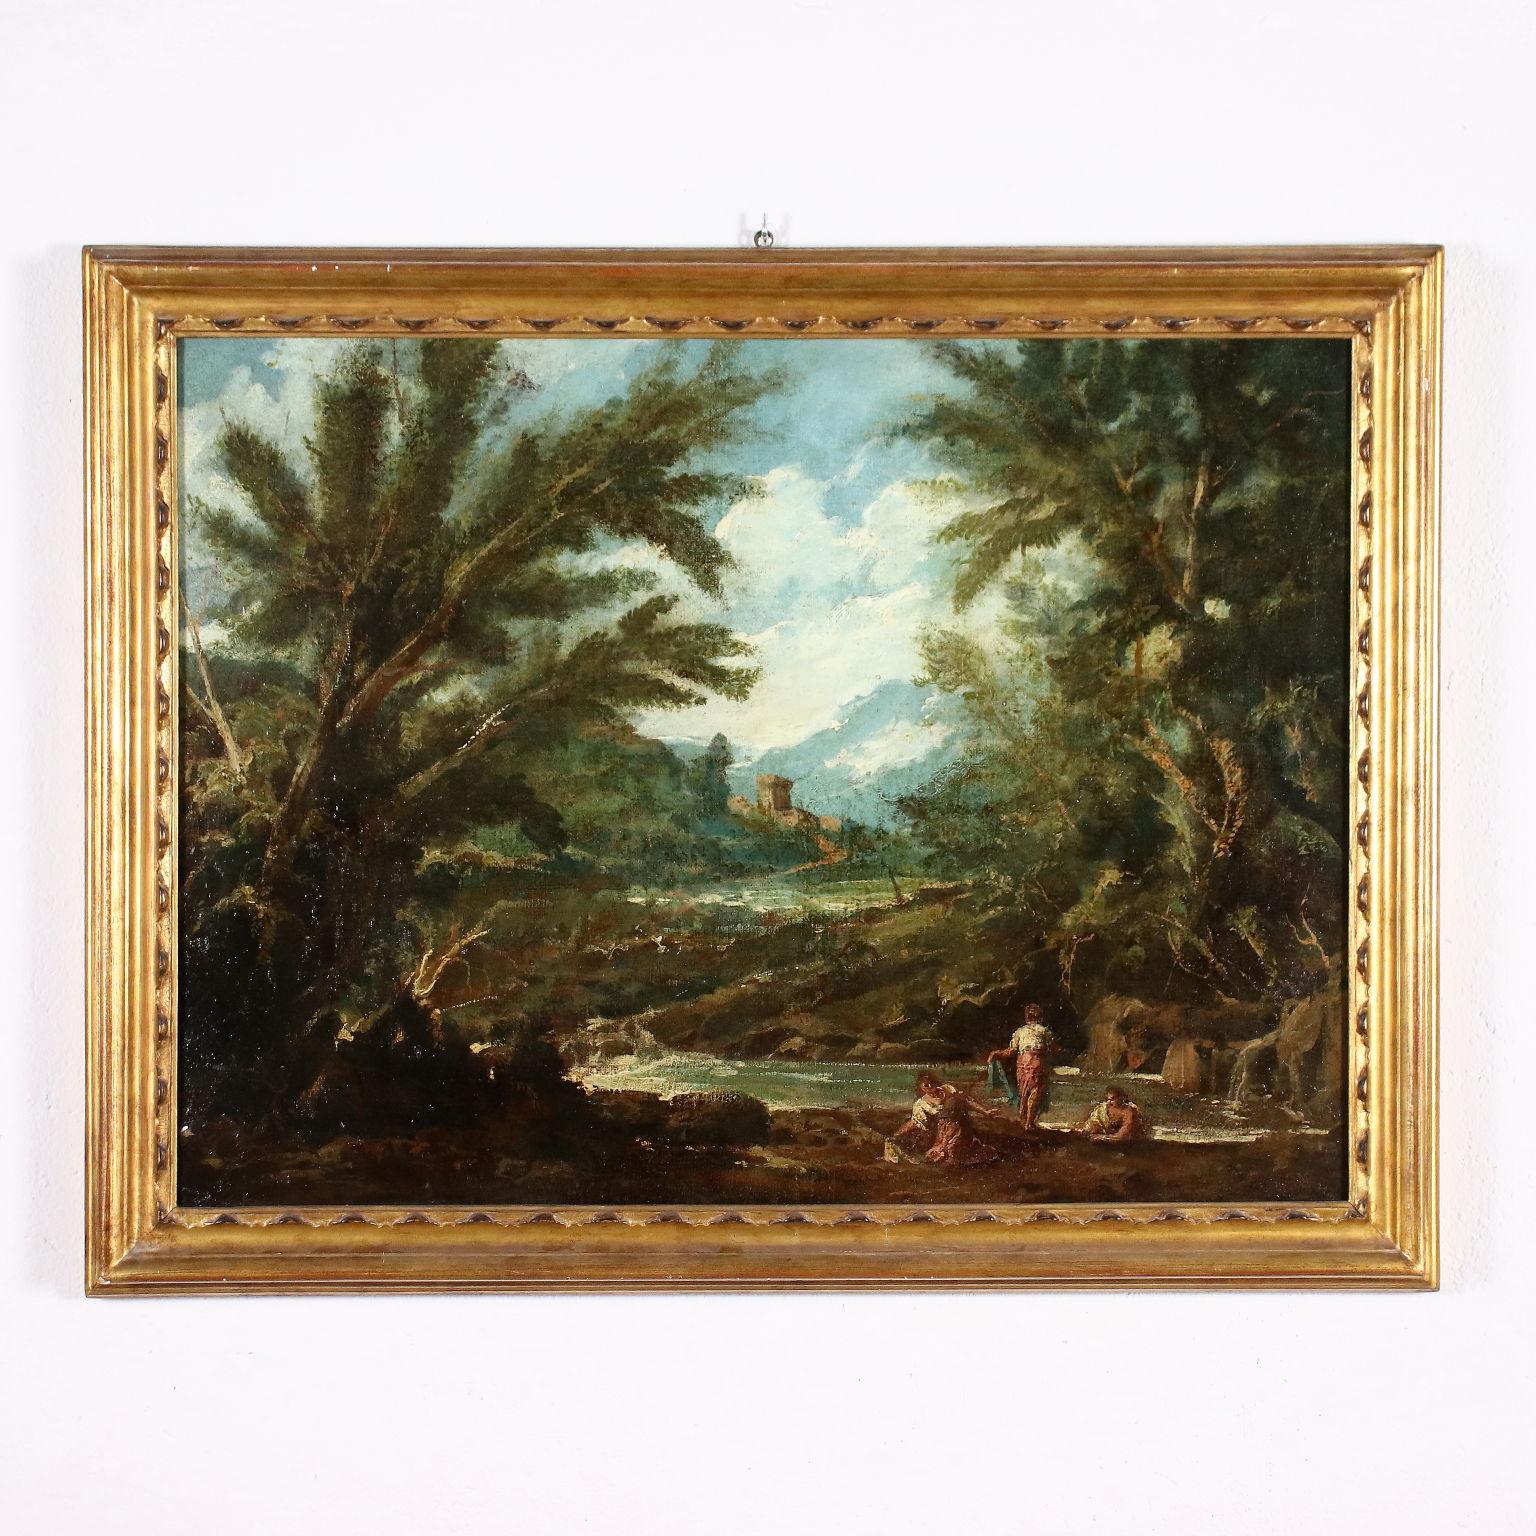 Antonio Francesco Peruzzini Landscape Painting - Oil on Canvas, XVII Century, Landscape with Figures at the River